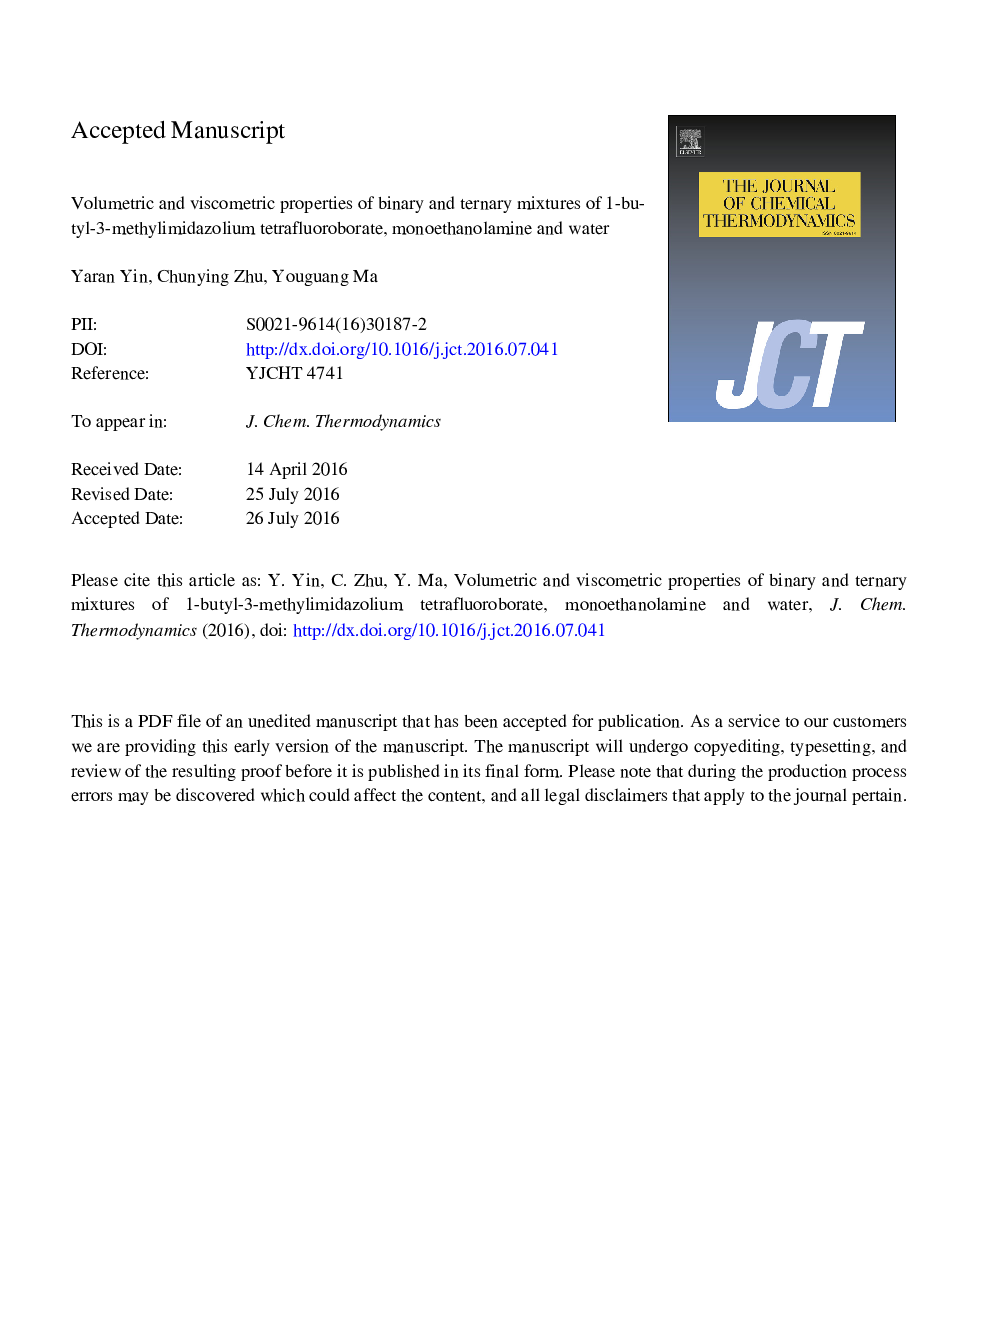 Volumetric and viscometric properties of binary and ternary mixtures of 1-butyl-3-methylimidazolium tetrafluoroborate, monoethanolamine and water